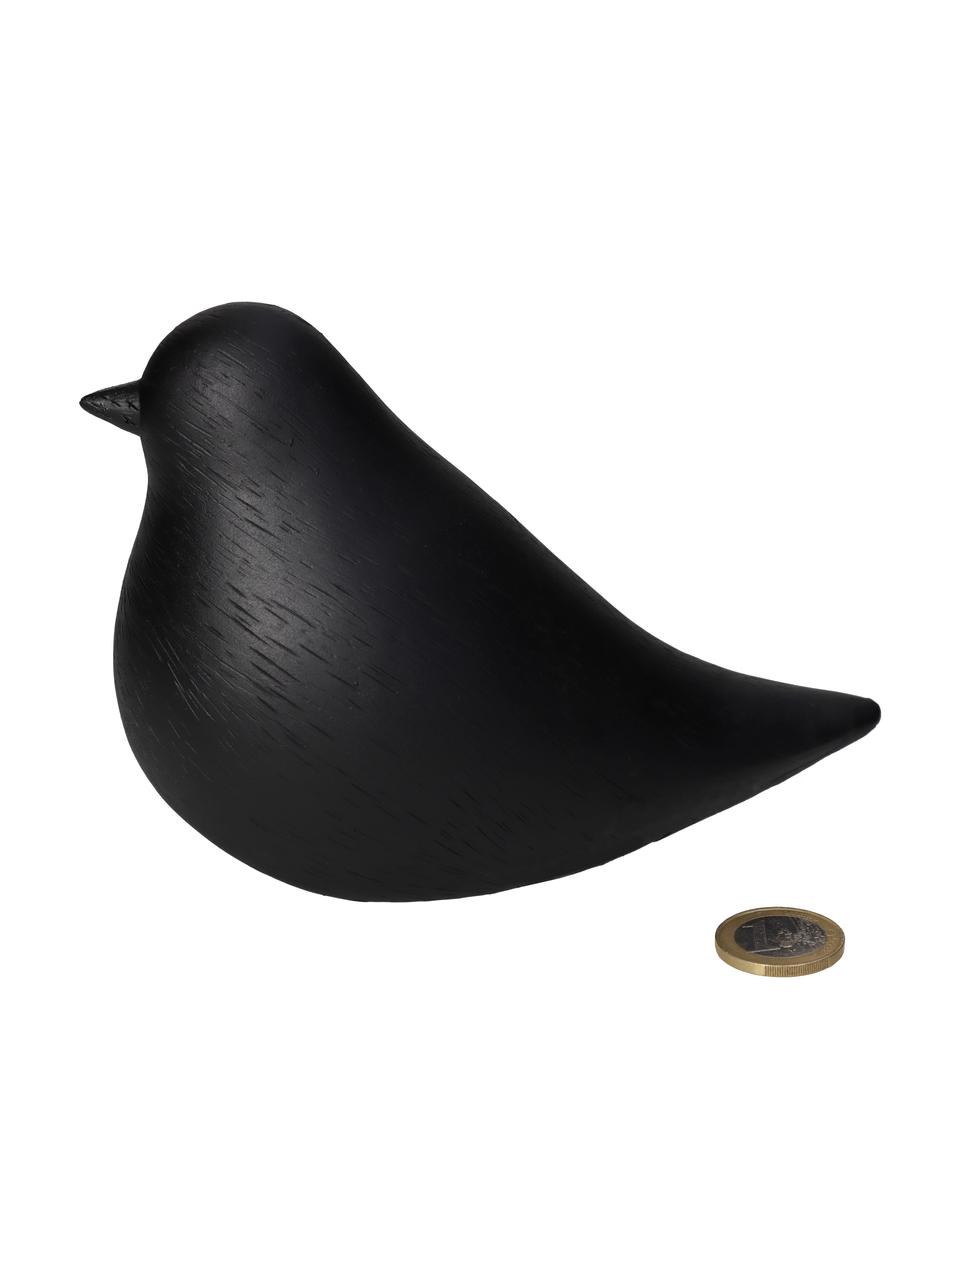 Objet décoratif Bird, Polyrésine, Noir, larg. 8 x haut. 11 cm